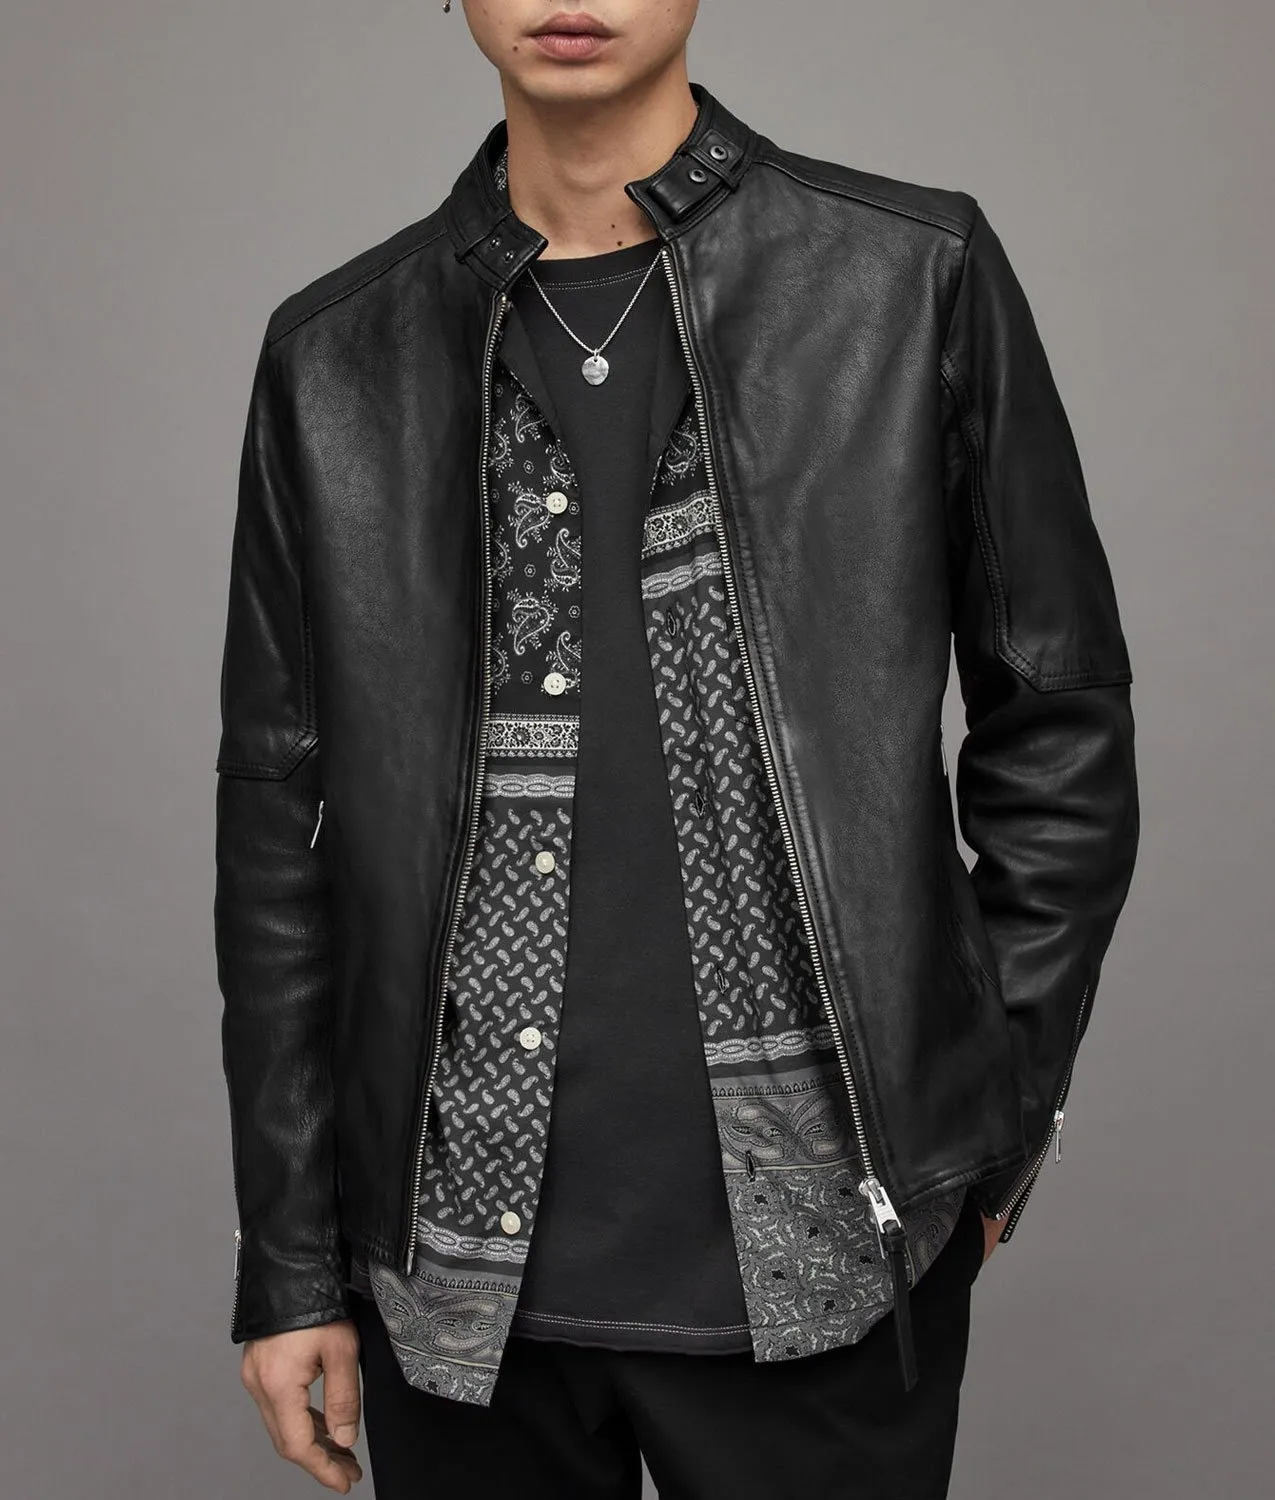 arman-morales-leather-jacket